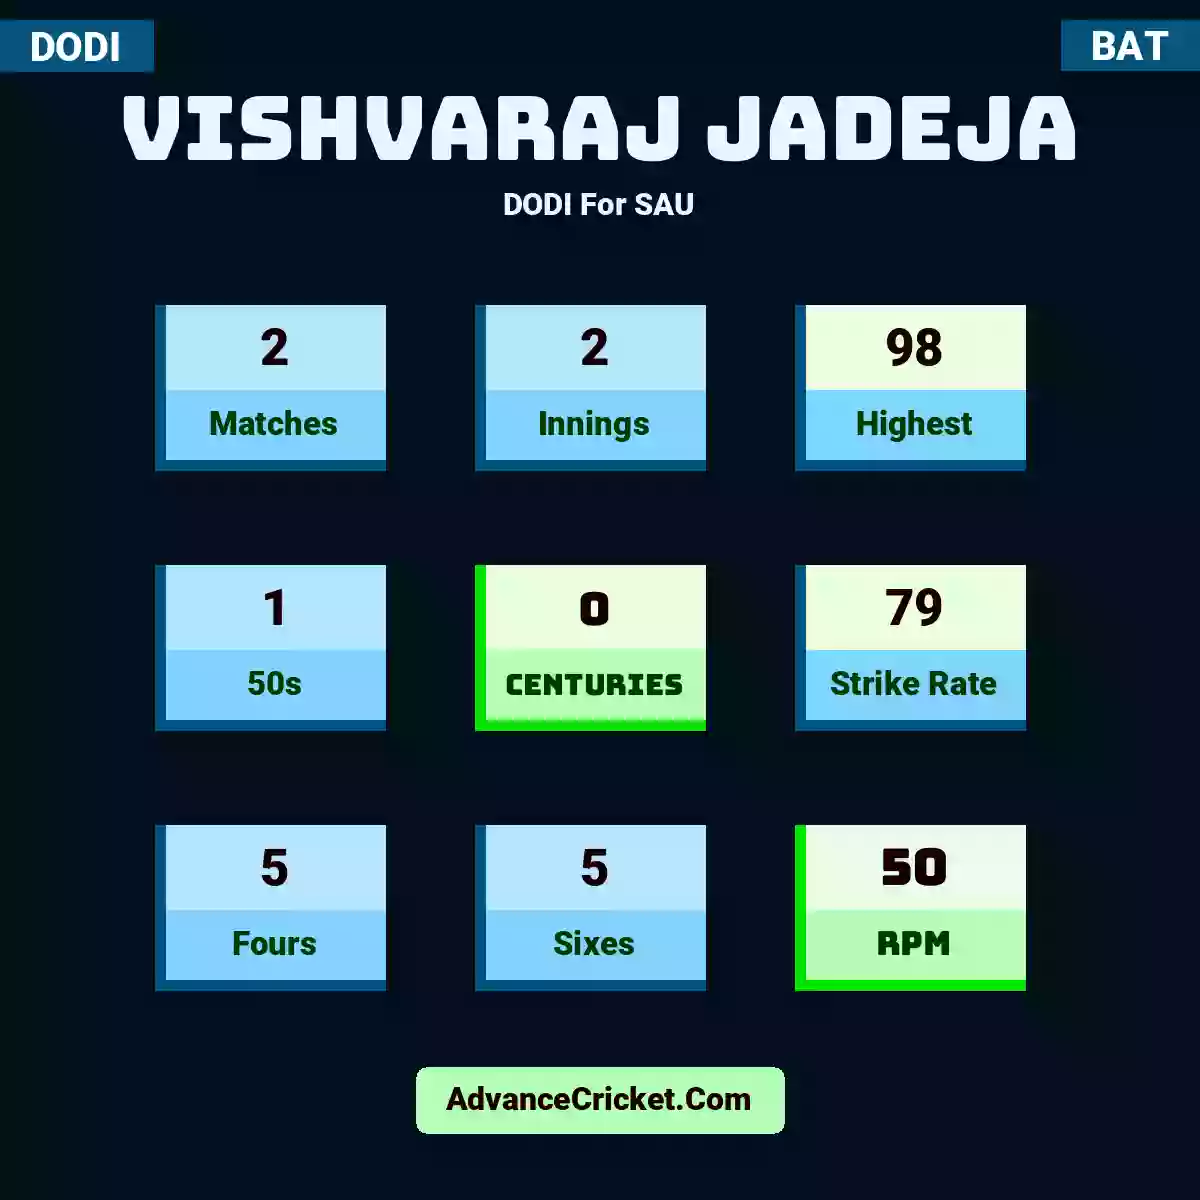 Vishvaraj Jadeja DODI  For SAU, Vishvaraj Jadeja played 2 matches, scored 98 runs as highest, 1 half-centuries, and 0 centuries, with a strike rate of 79. V.Jadeja hit 5 fours and 5 sixes, with an RPM of 50.